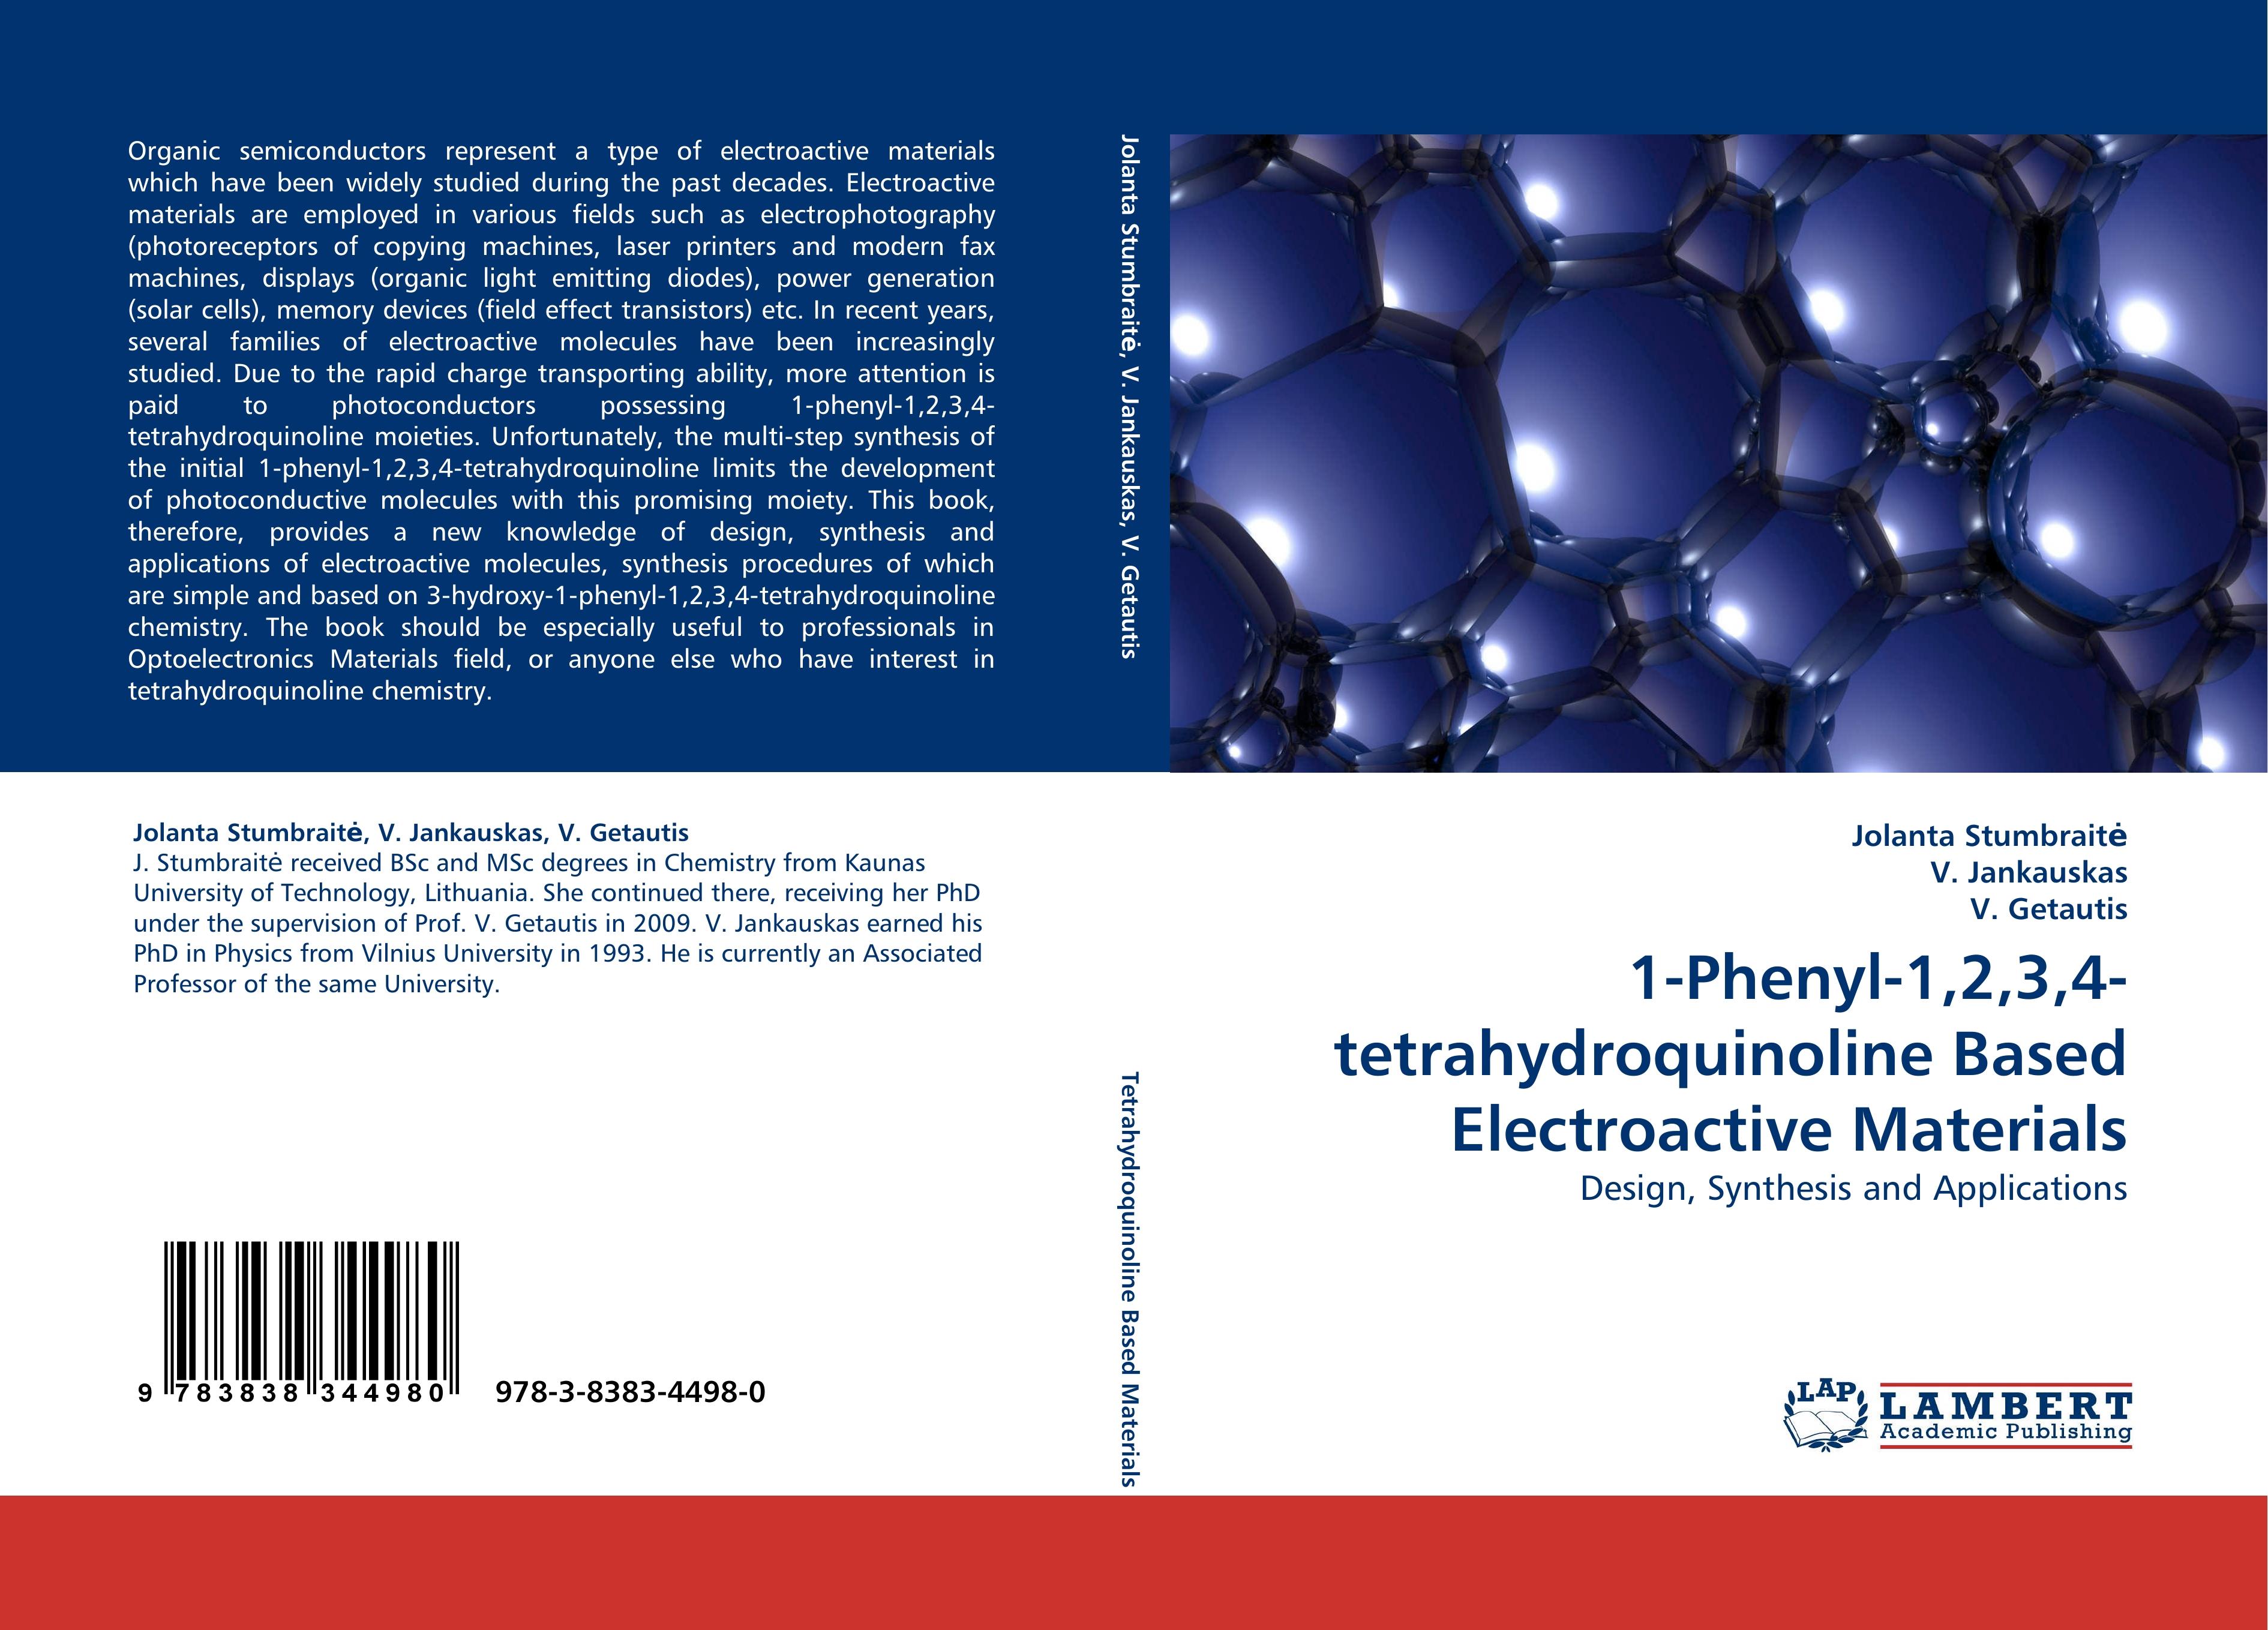 1-Phenyl-1,2,3,4-tetrahydroquinoline Based Electroactive Materials - Jolanta Stumbraite V. Jankauskas V. Getautis